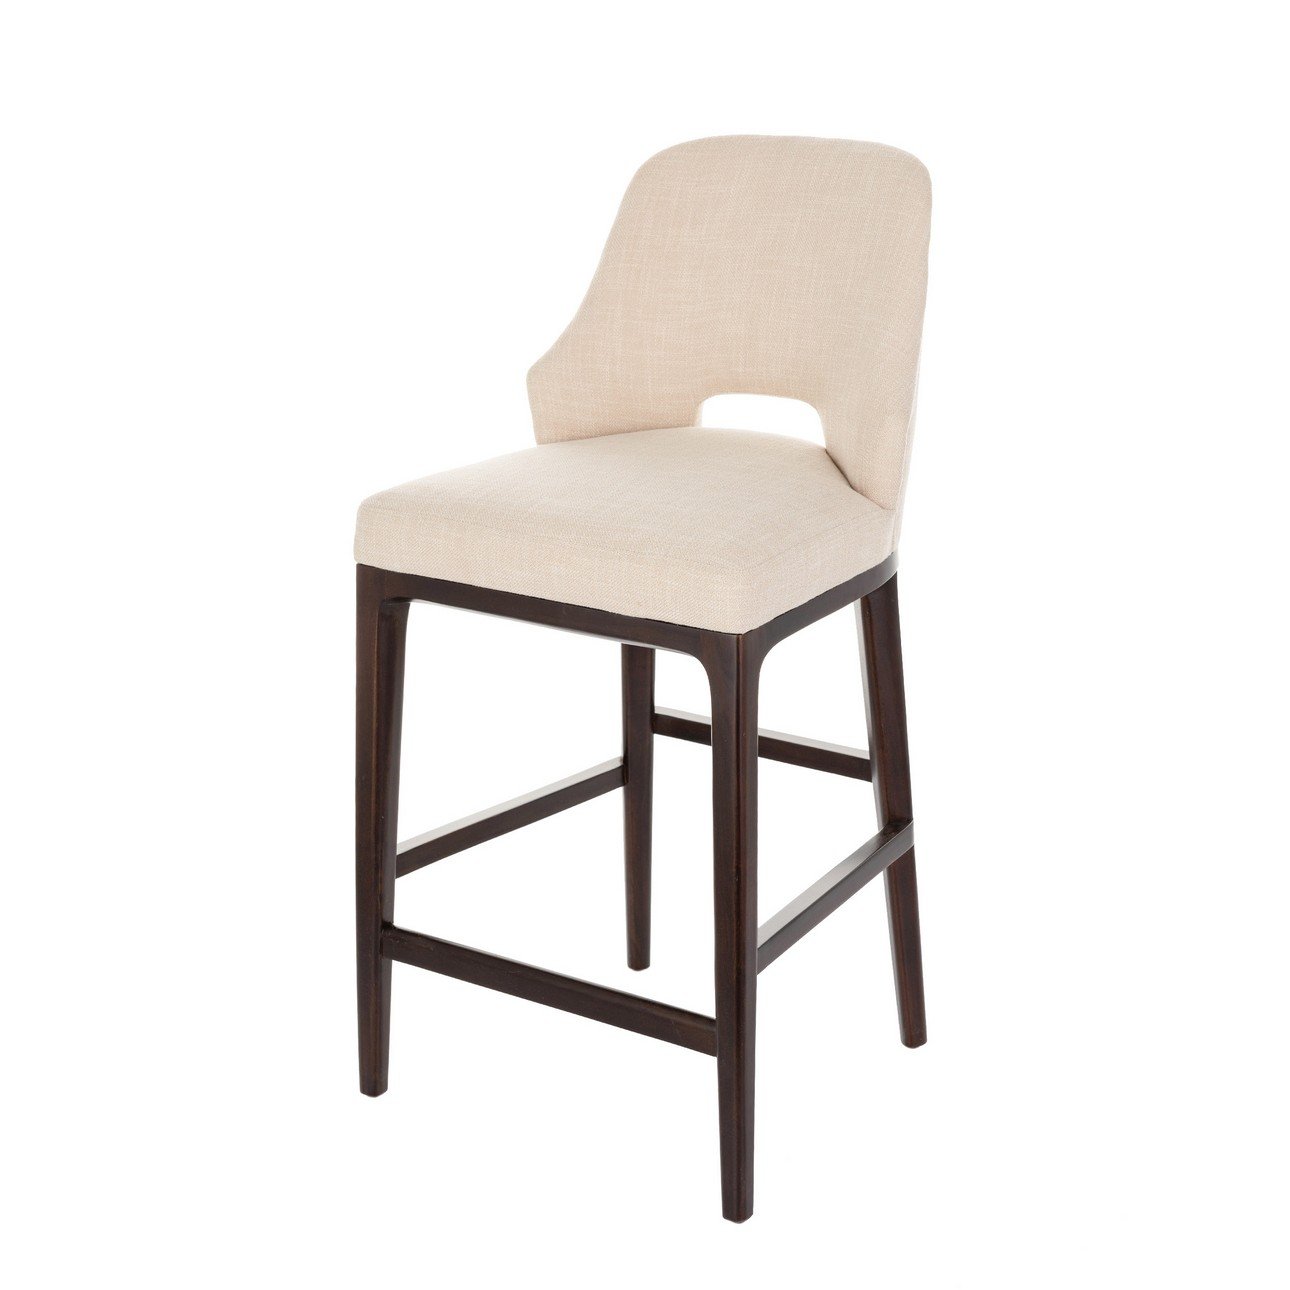 Dekoria Barová židle Madoc 48x55x99cm, 48 x 55 x 99 cm